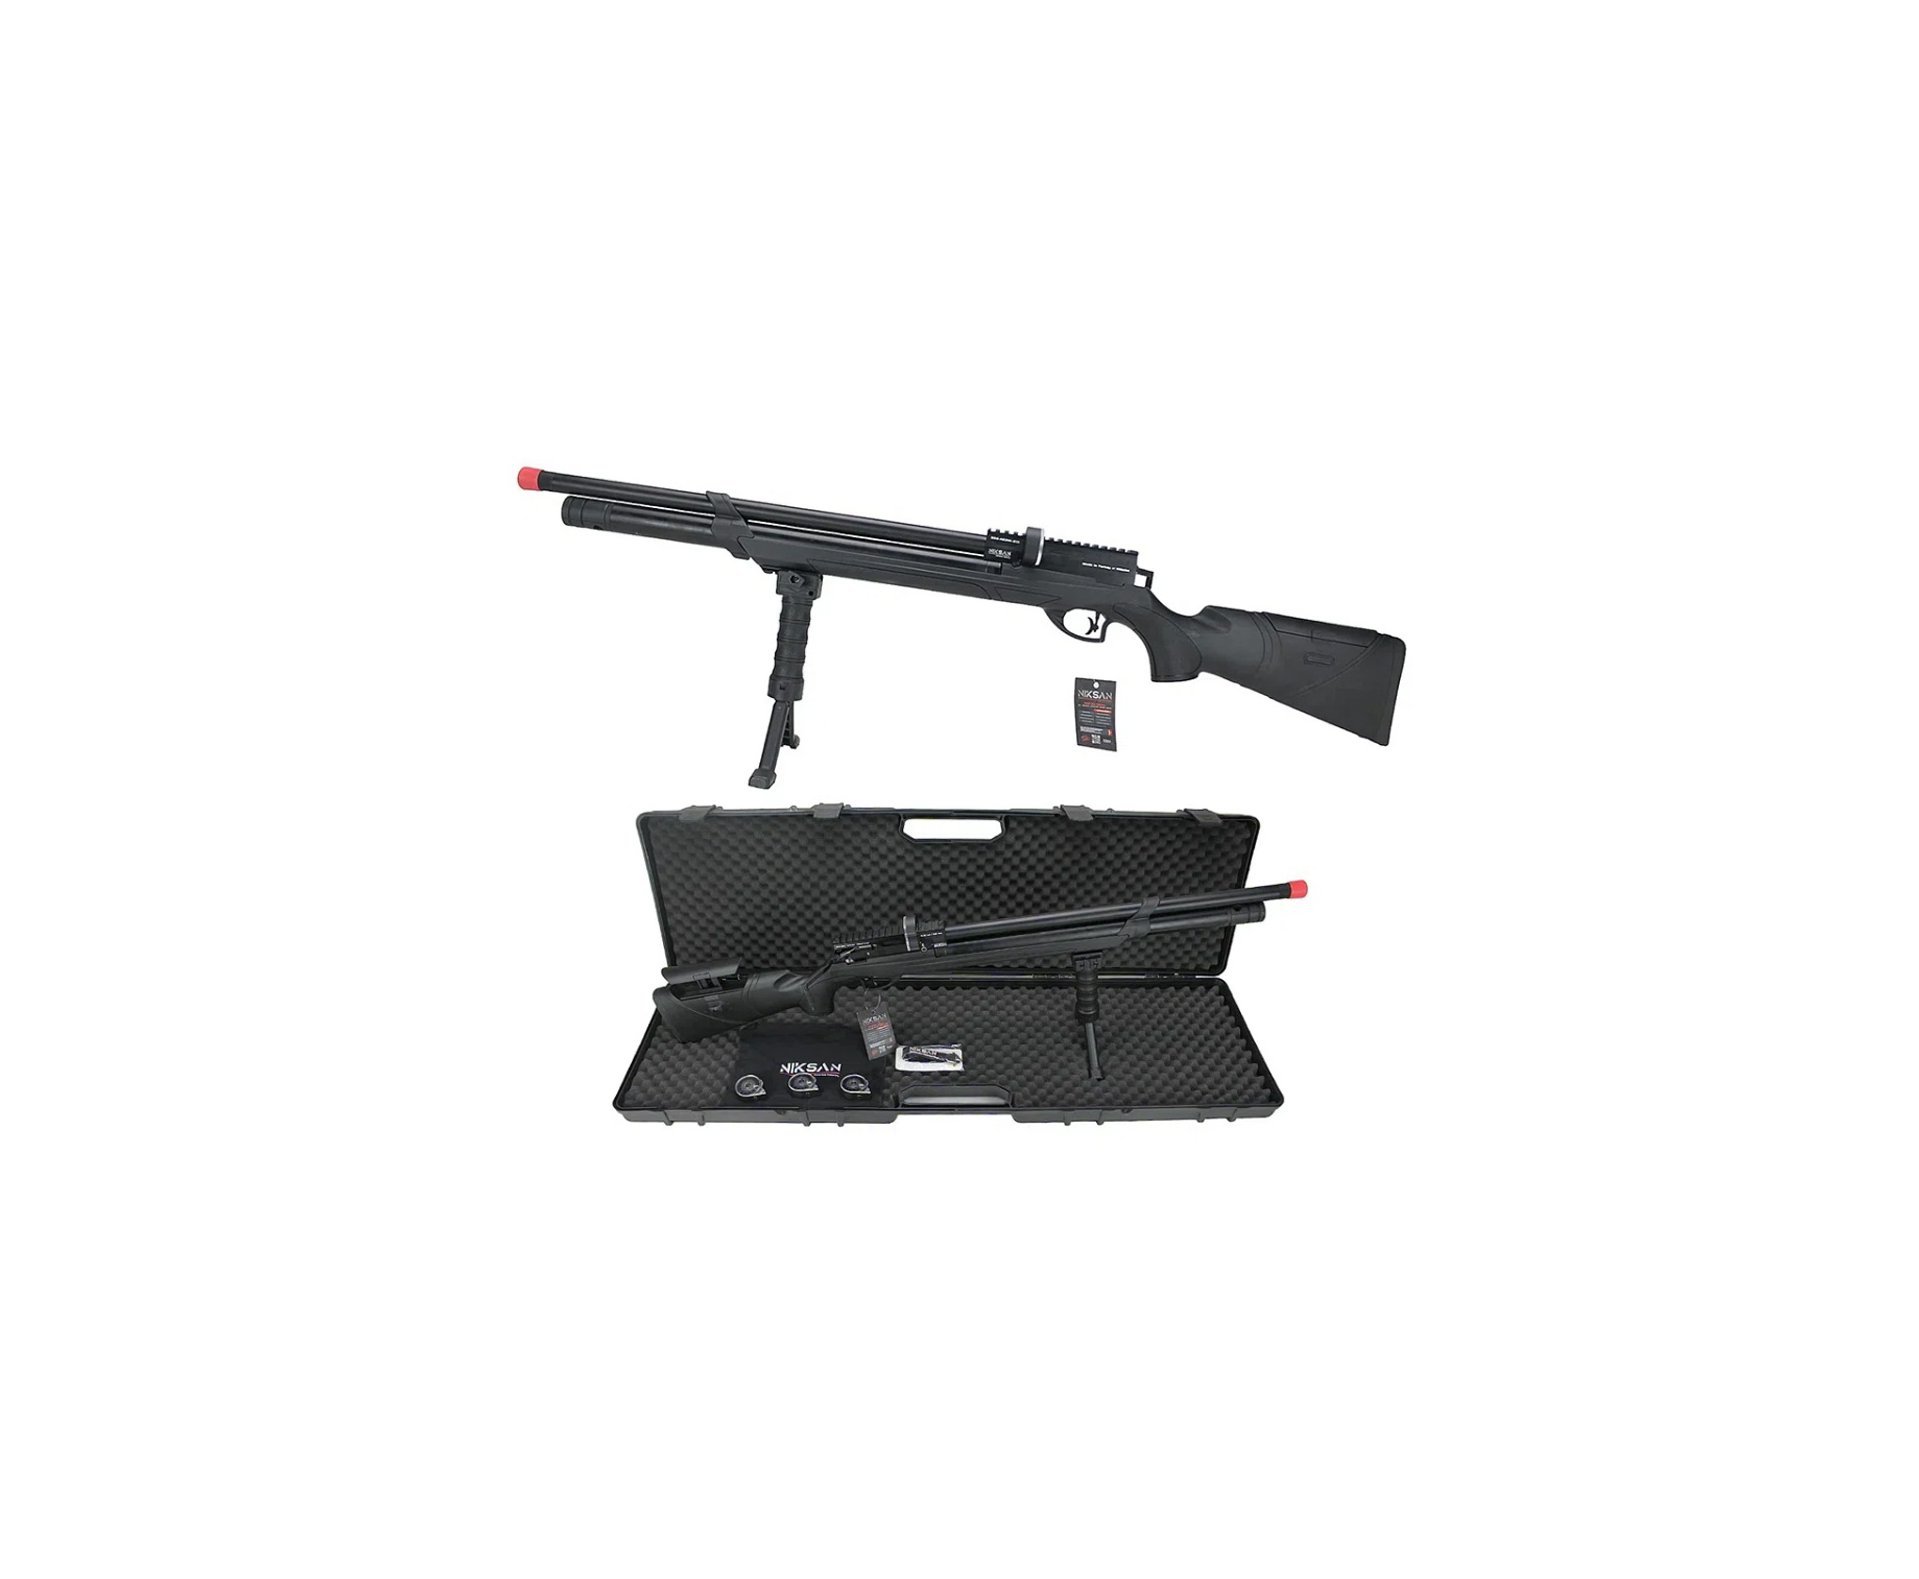 Carabina de Pressão PCP NKS Archero S 5,5mm - Niksan Defense + Scuba 3L 300bar + 2 Caixas de Chumbo + Alvos